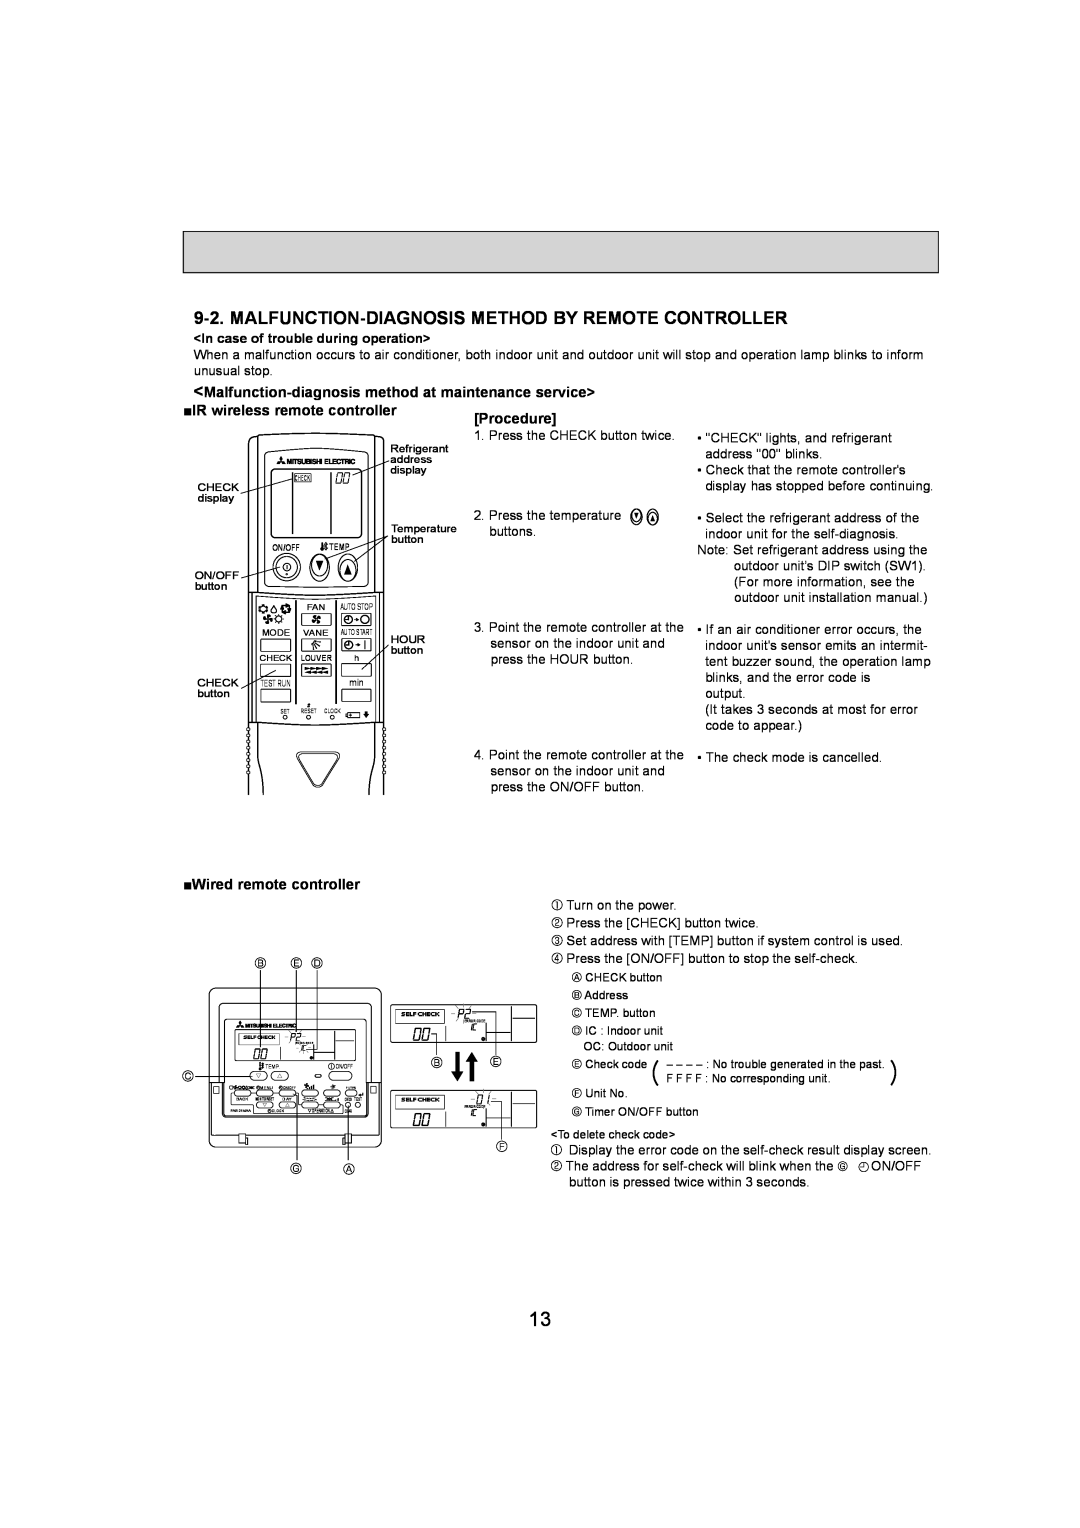 Mitsumi electronic PKA-A18HA4, PKA-A12HA4 service manual IR wireless remote controller, Procedure, Wired remote controller 